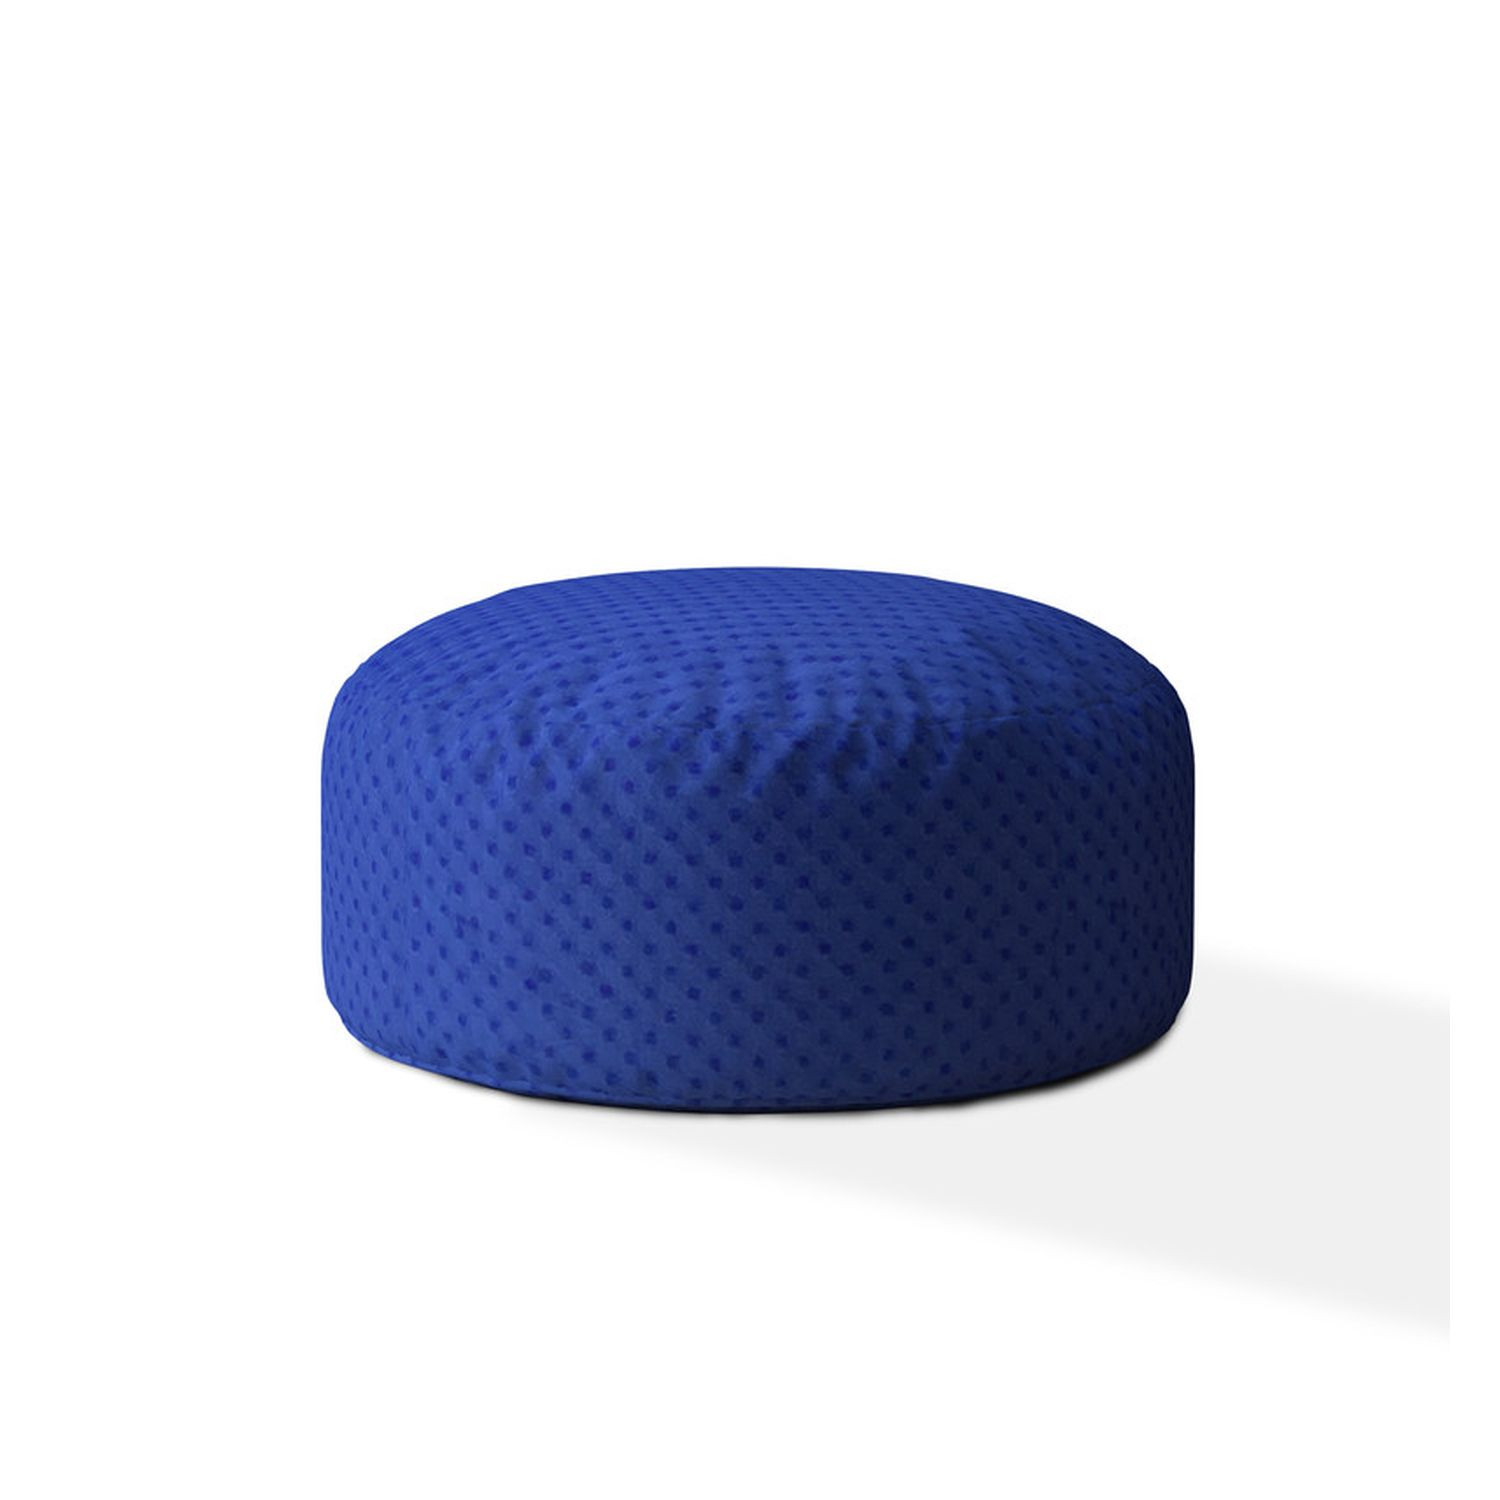 24" Blue Polyester Round Pouf Ottoman-518306-1